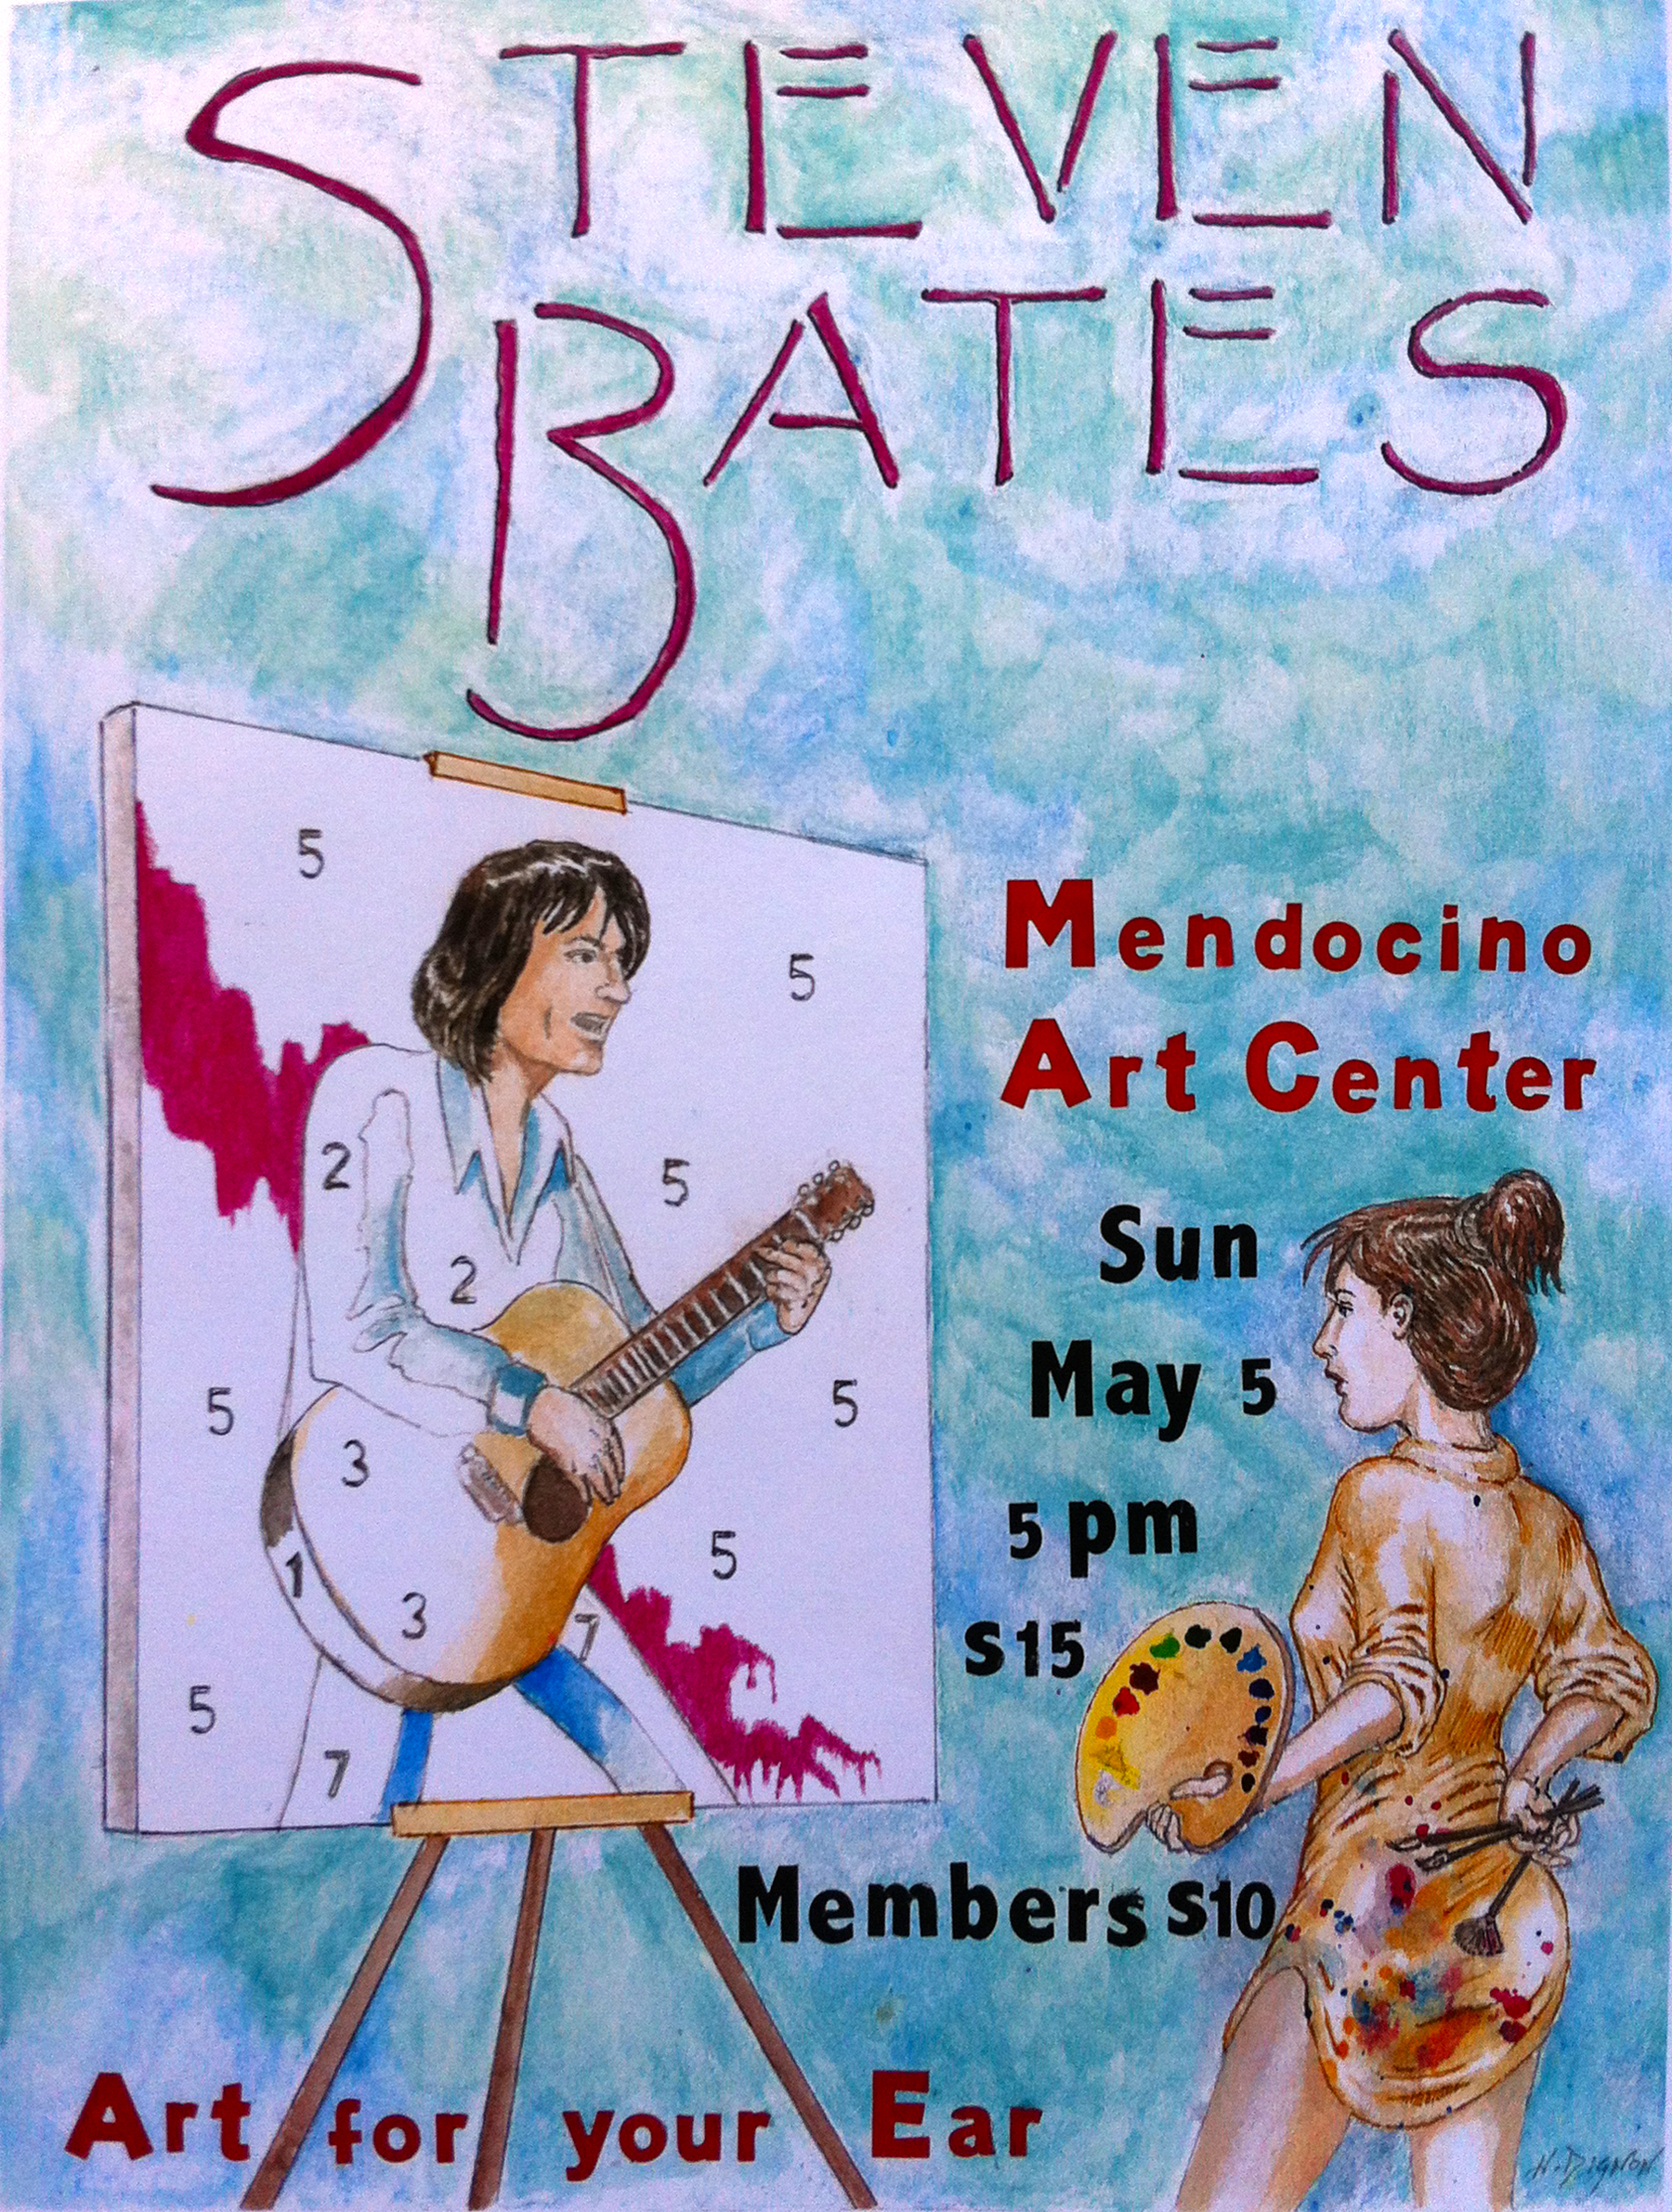 Mendocino Art Center Poster 5/5/13